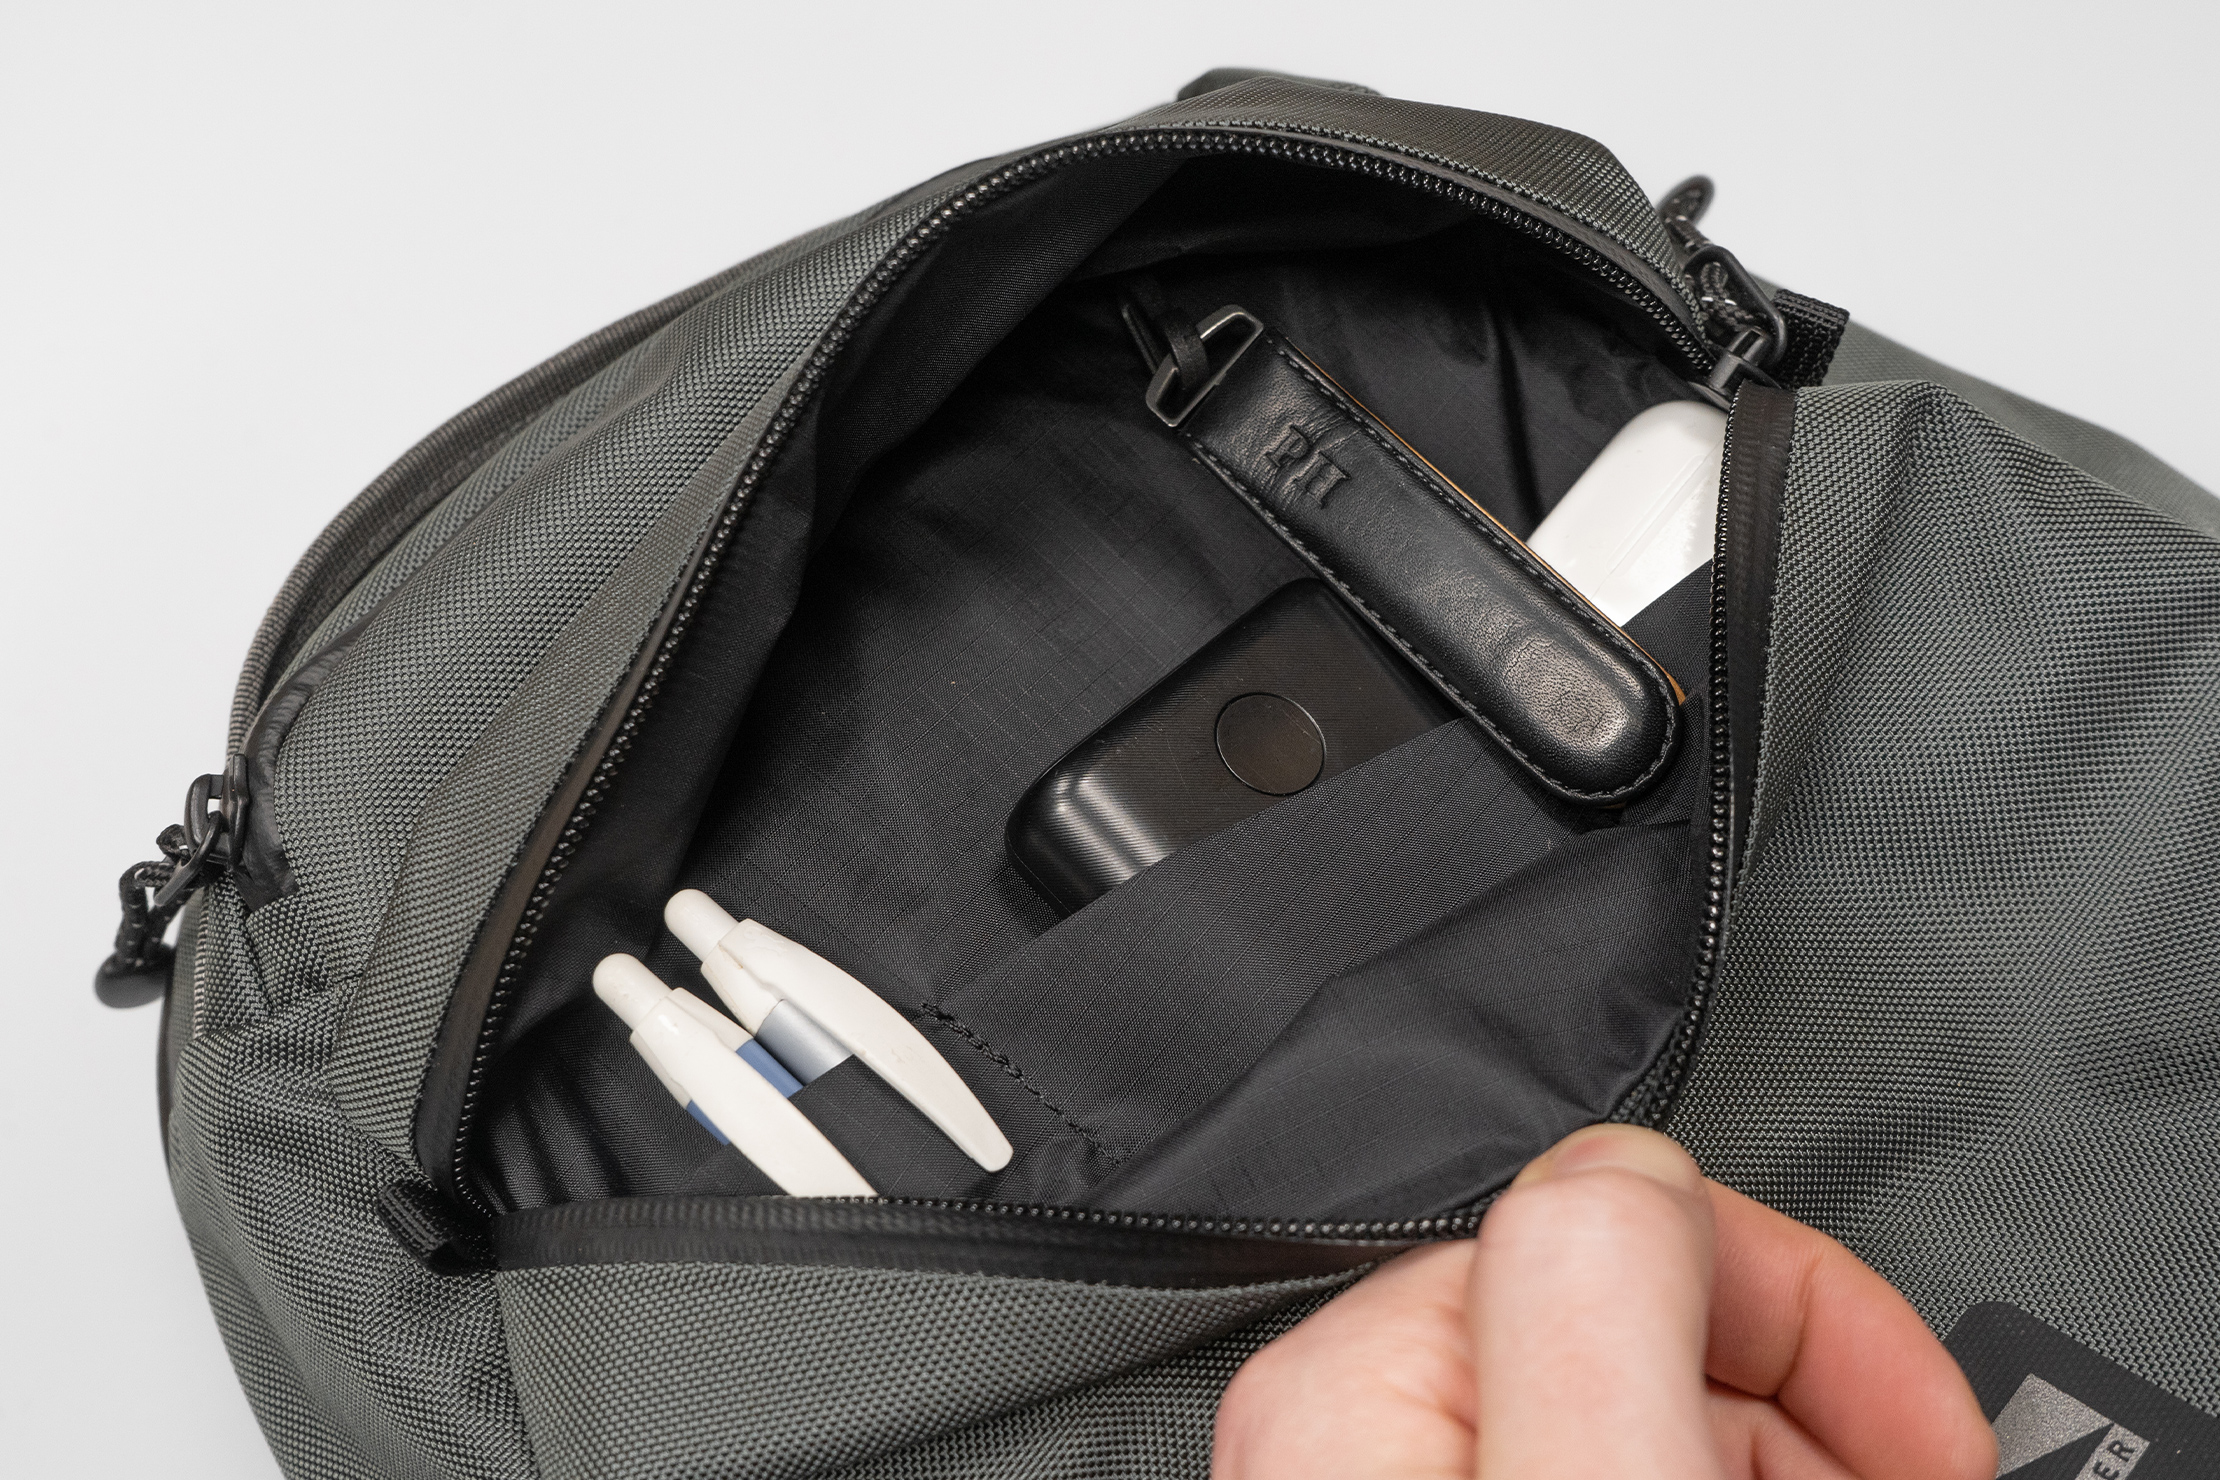 Lander Commuter Backpack 25L | The front pocket’s large, with adequate organization